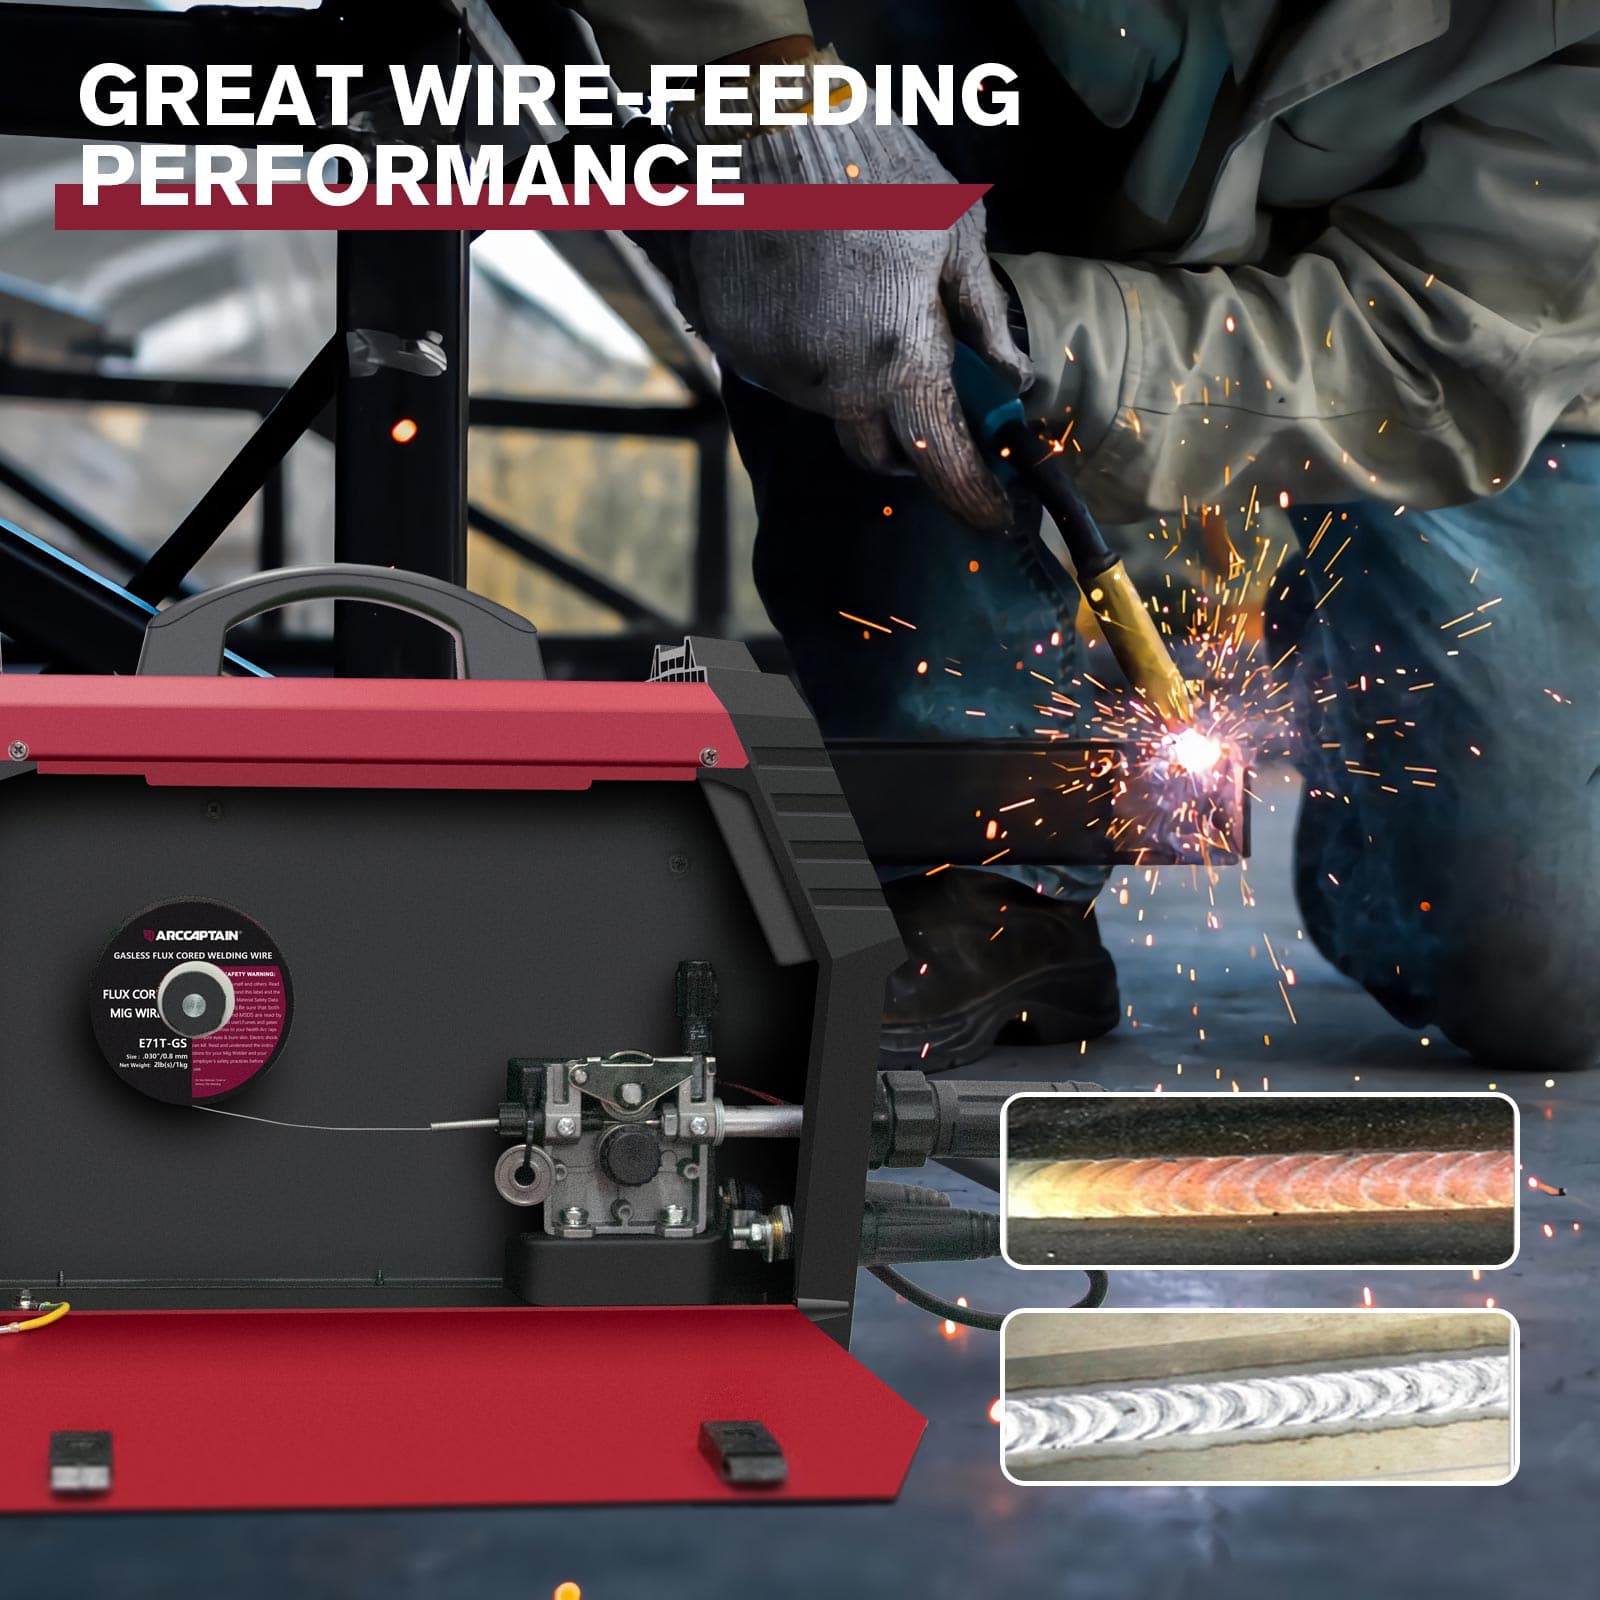 ‎E71T-GS Flux Core Welding Wire use